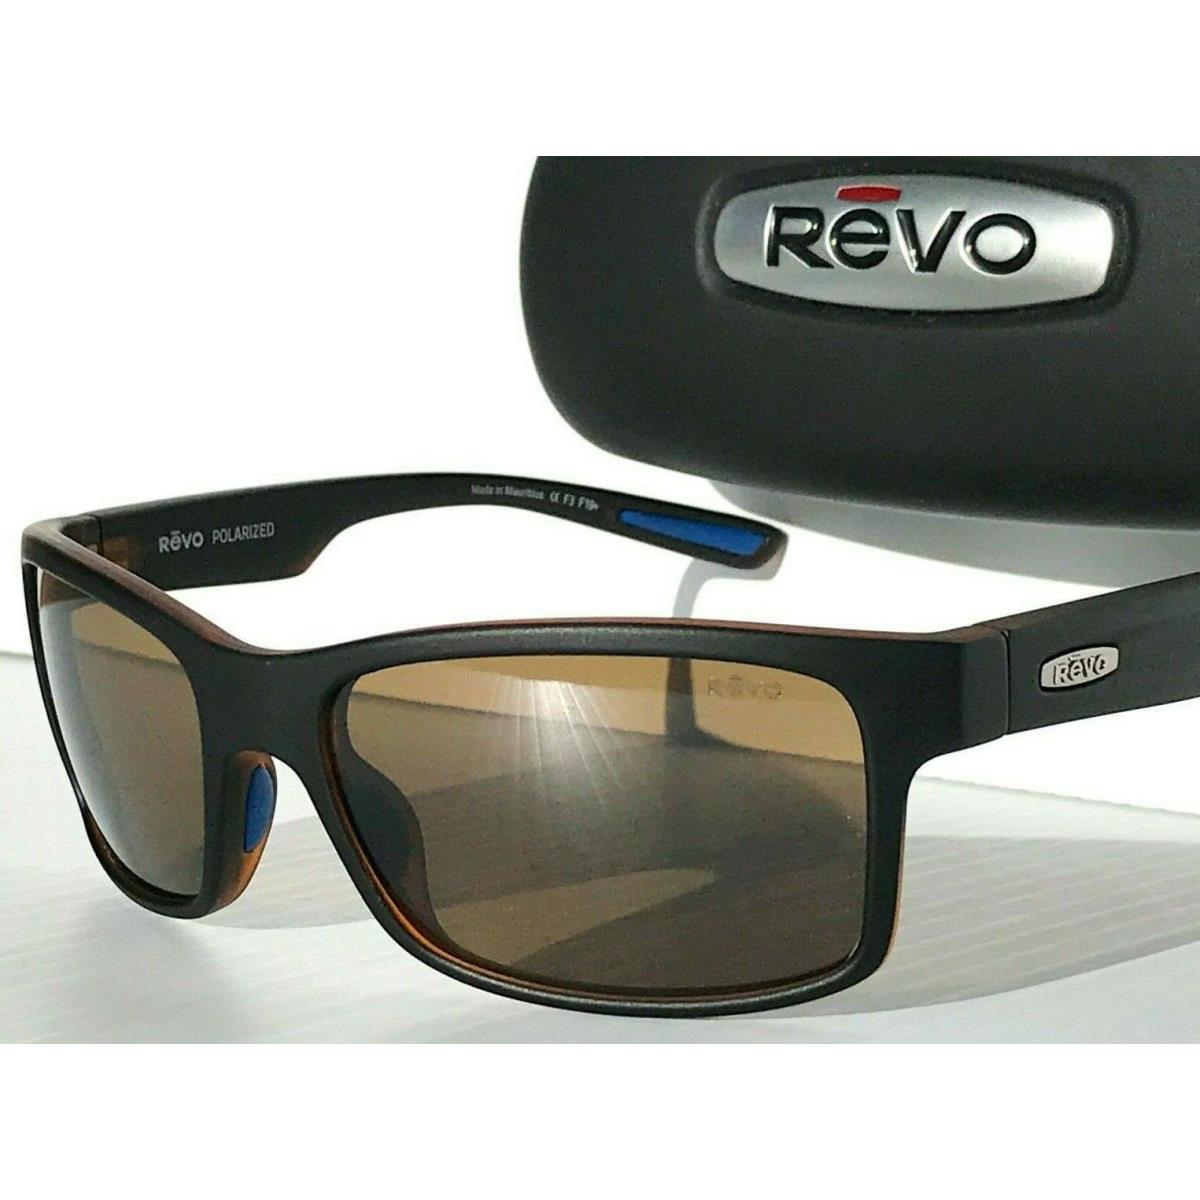 Revo sunglasses Crawler - Brown Frame, Brown Lens